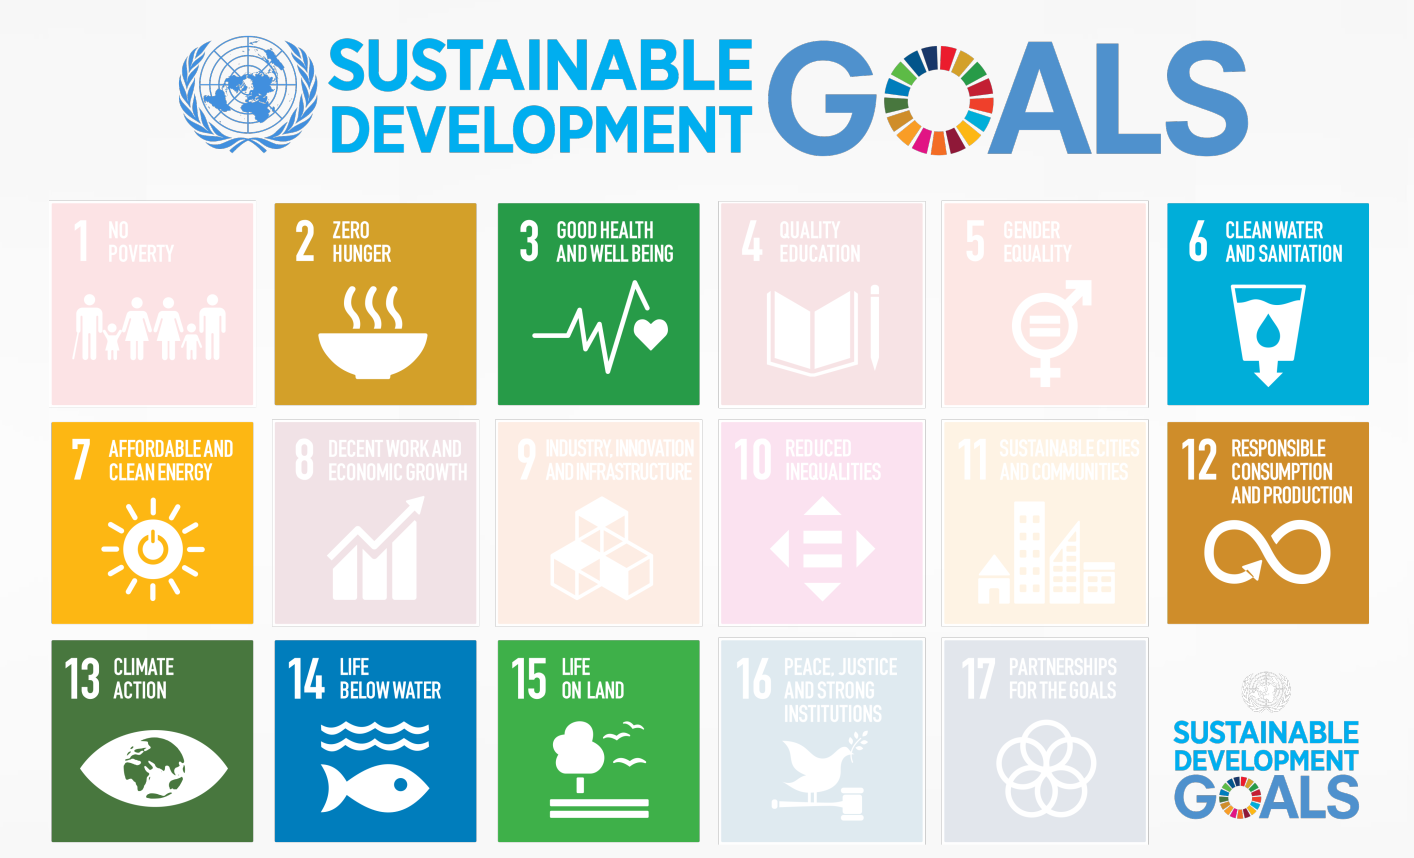 Sustainable development goals addressed by the NFDI4Microbiota work program